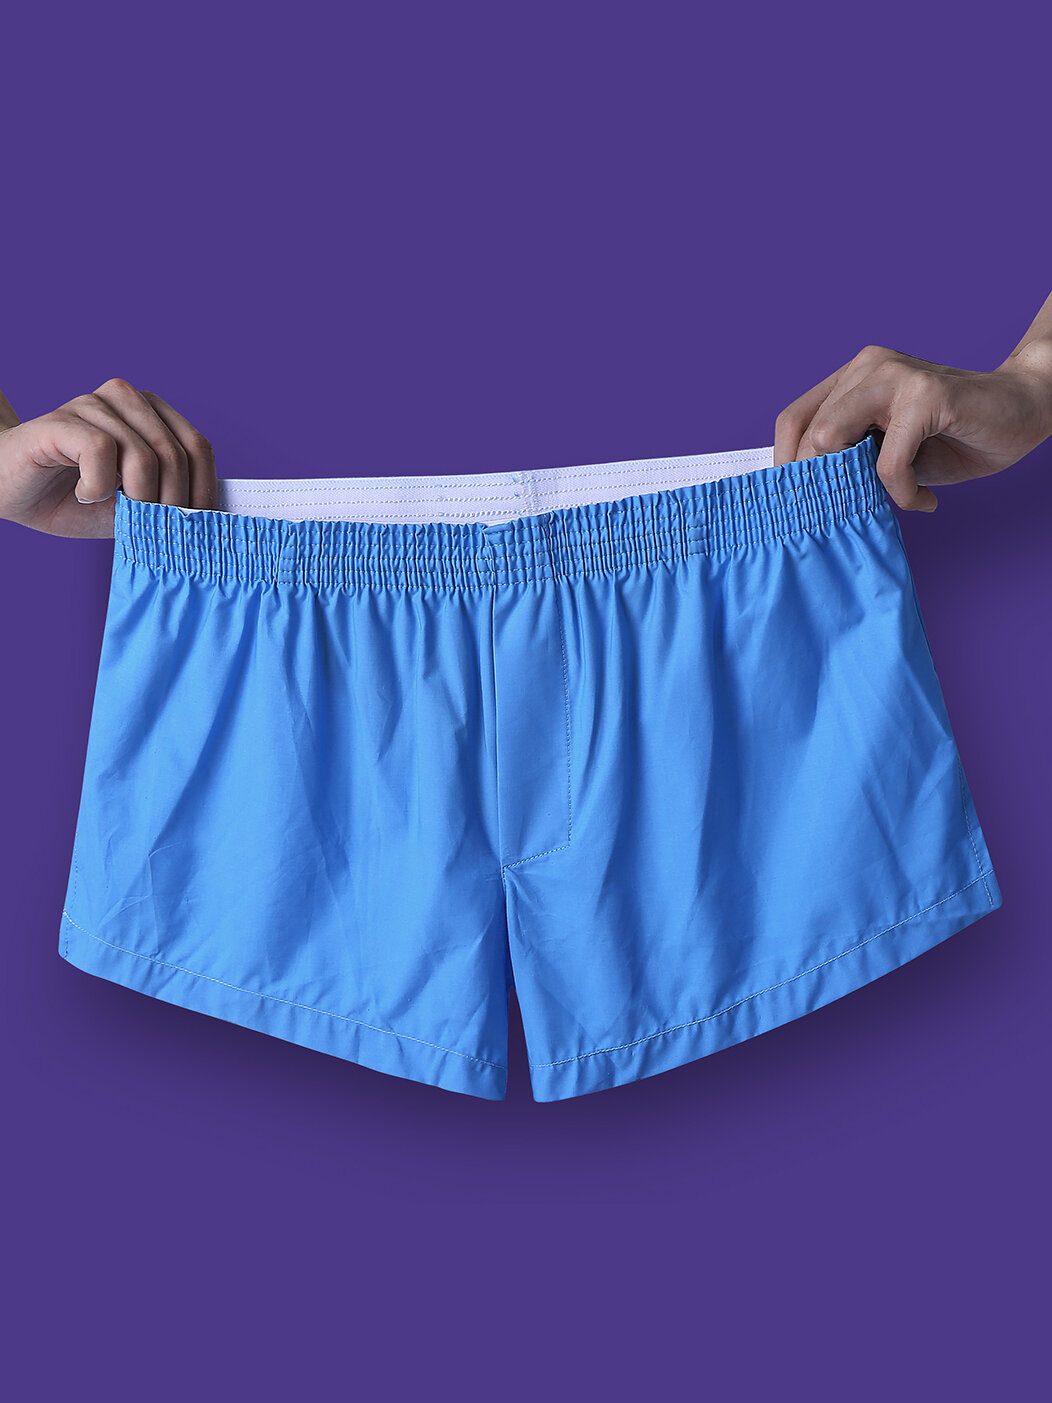 Casual Home Plain Boxer Shorts Inside Cotton Pouch Breathable Skin-friendly Boxer Briefs for Men